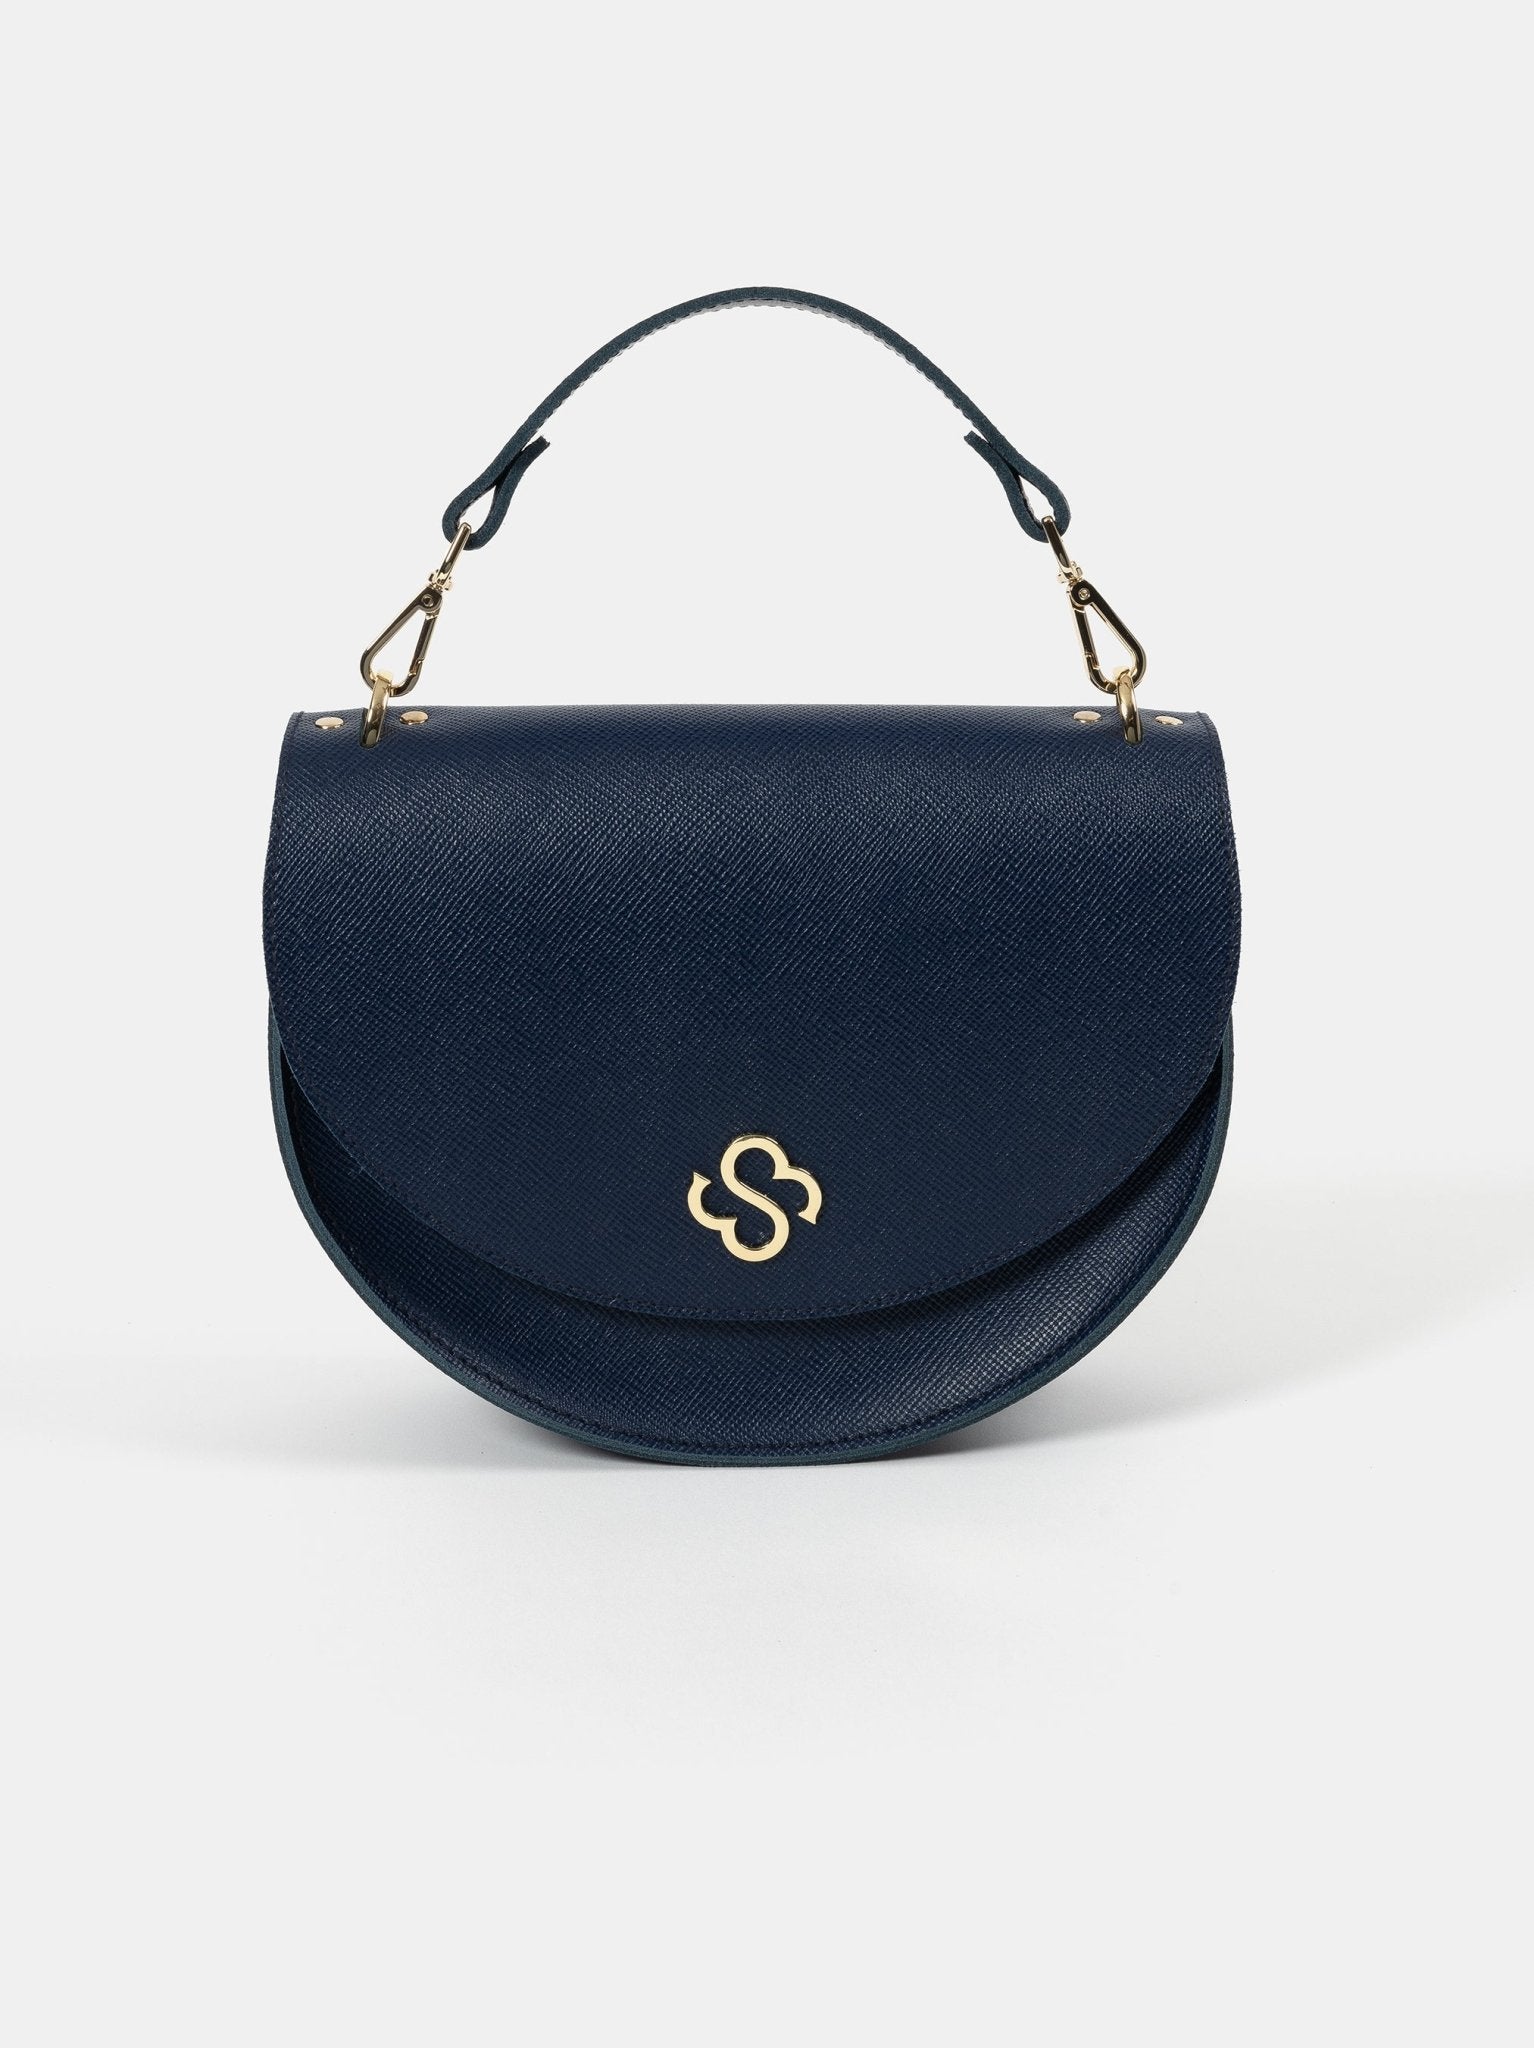 The Cambridge Satchel Co. Women's Handbag product